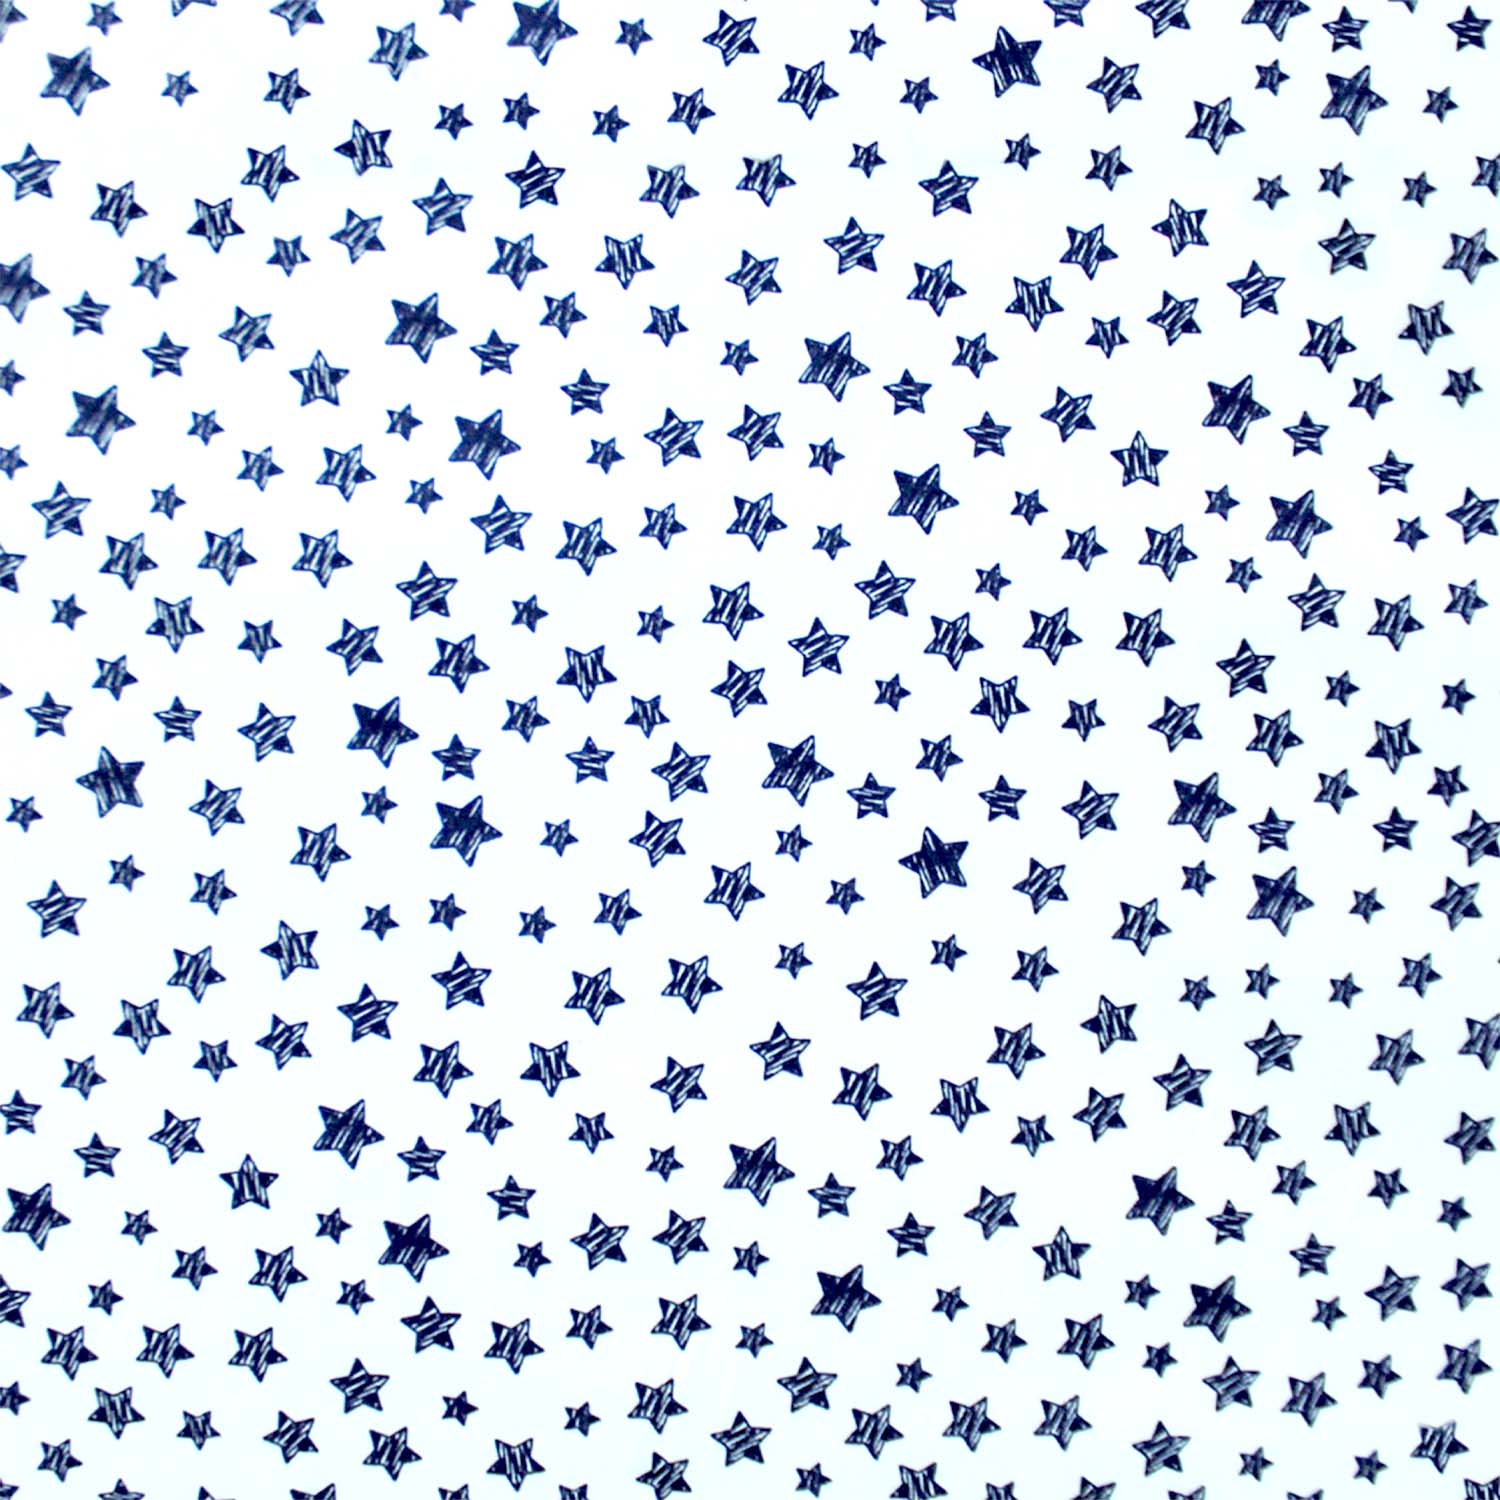 Tecido-Tricoline-Estrela-Riscada-Azul-Escuro-Fundo-Branco-Della-Aviamentos-10496